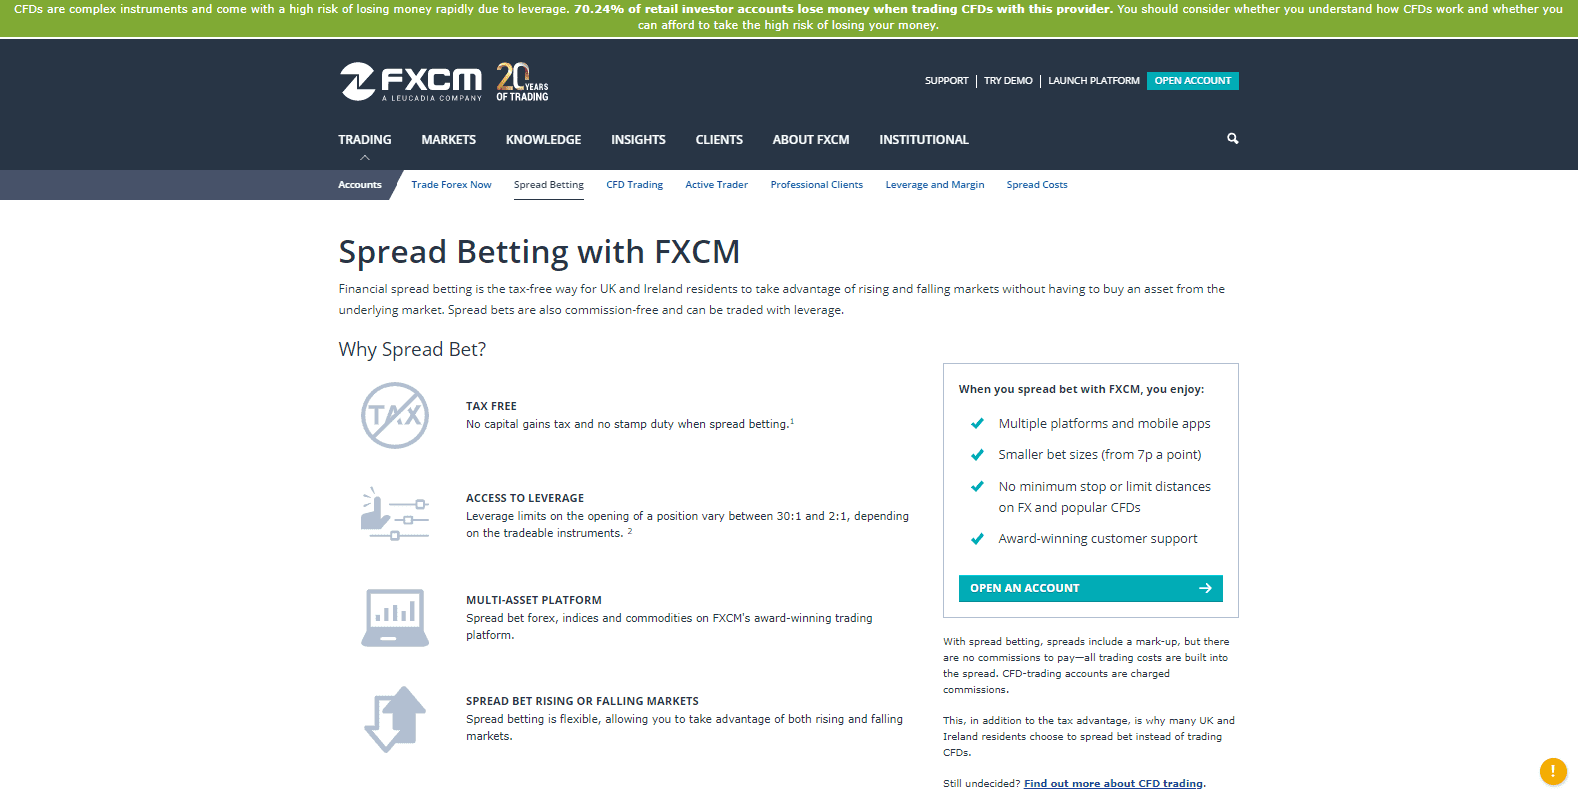 FXCM Review 2020 - Is FXCM Regulated? | DailyForex